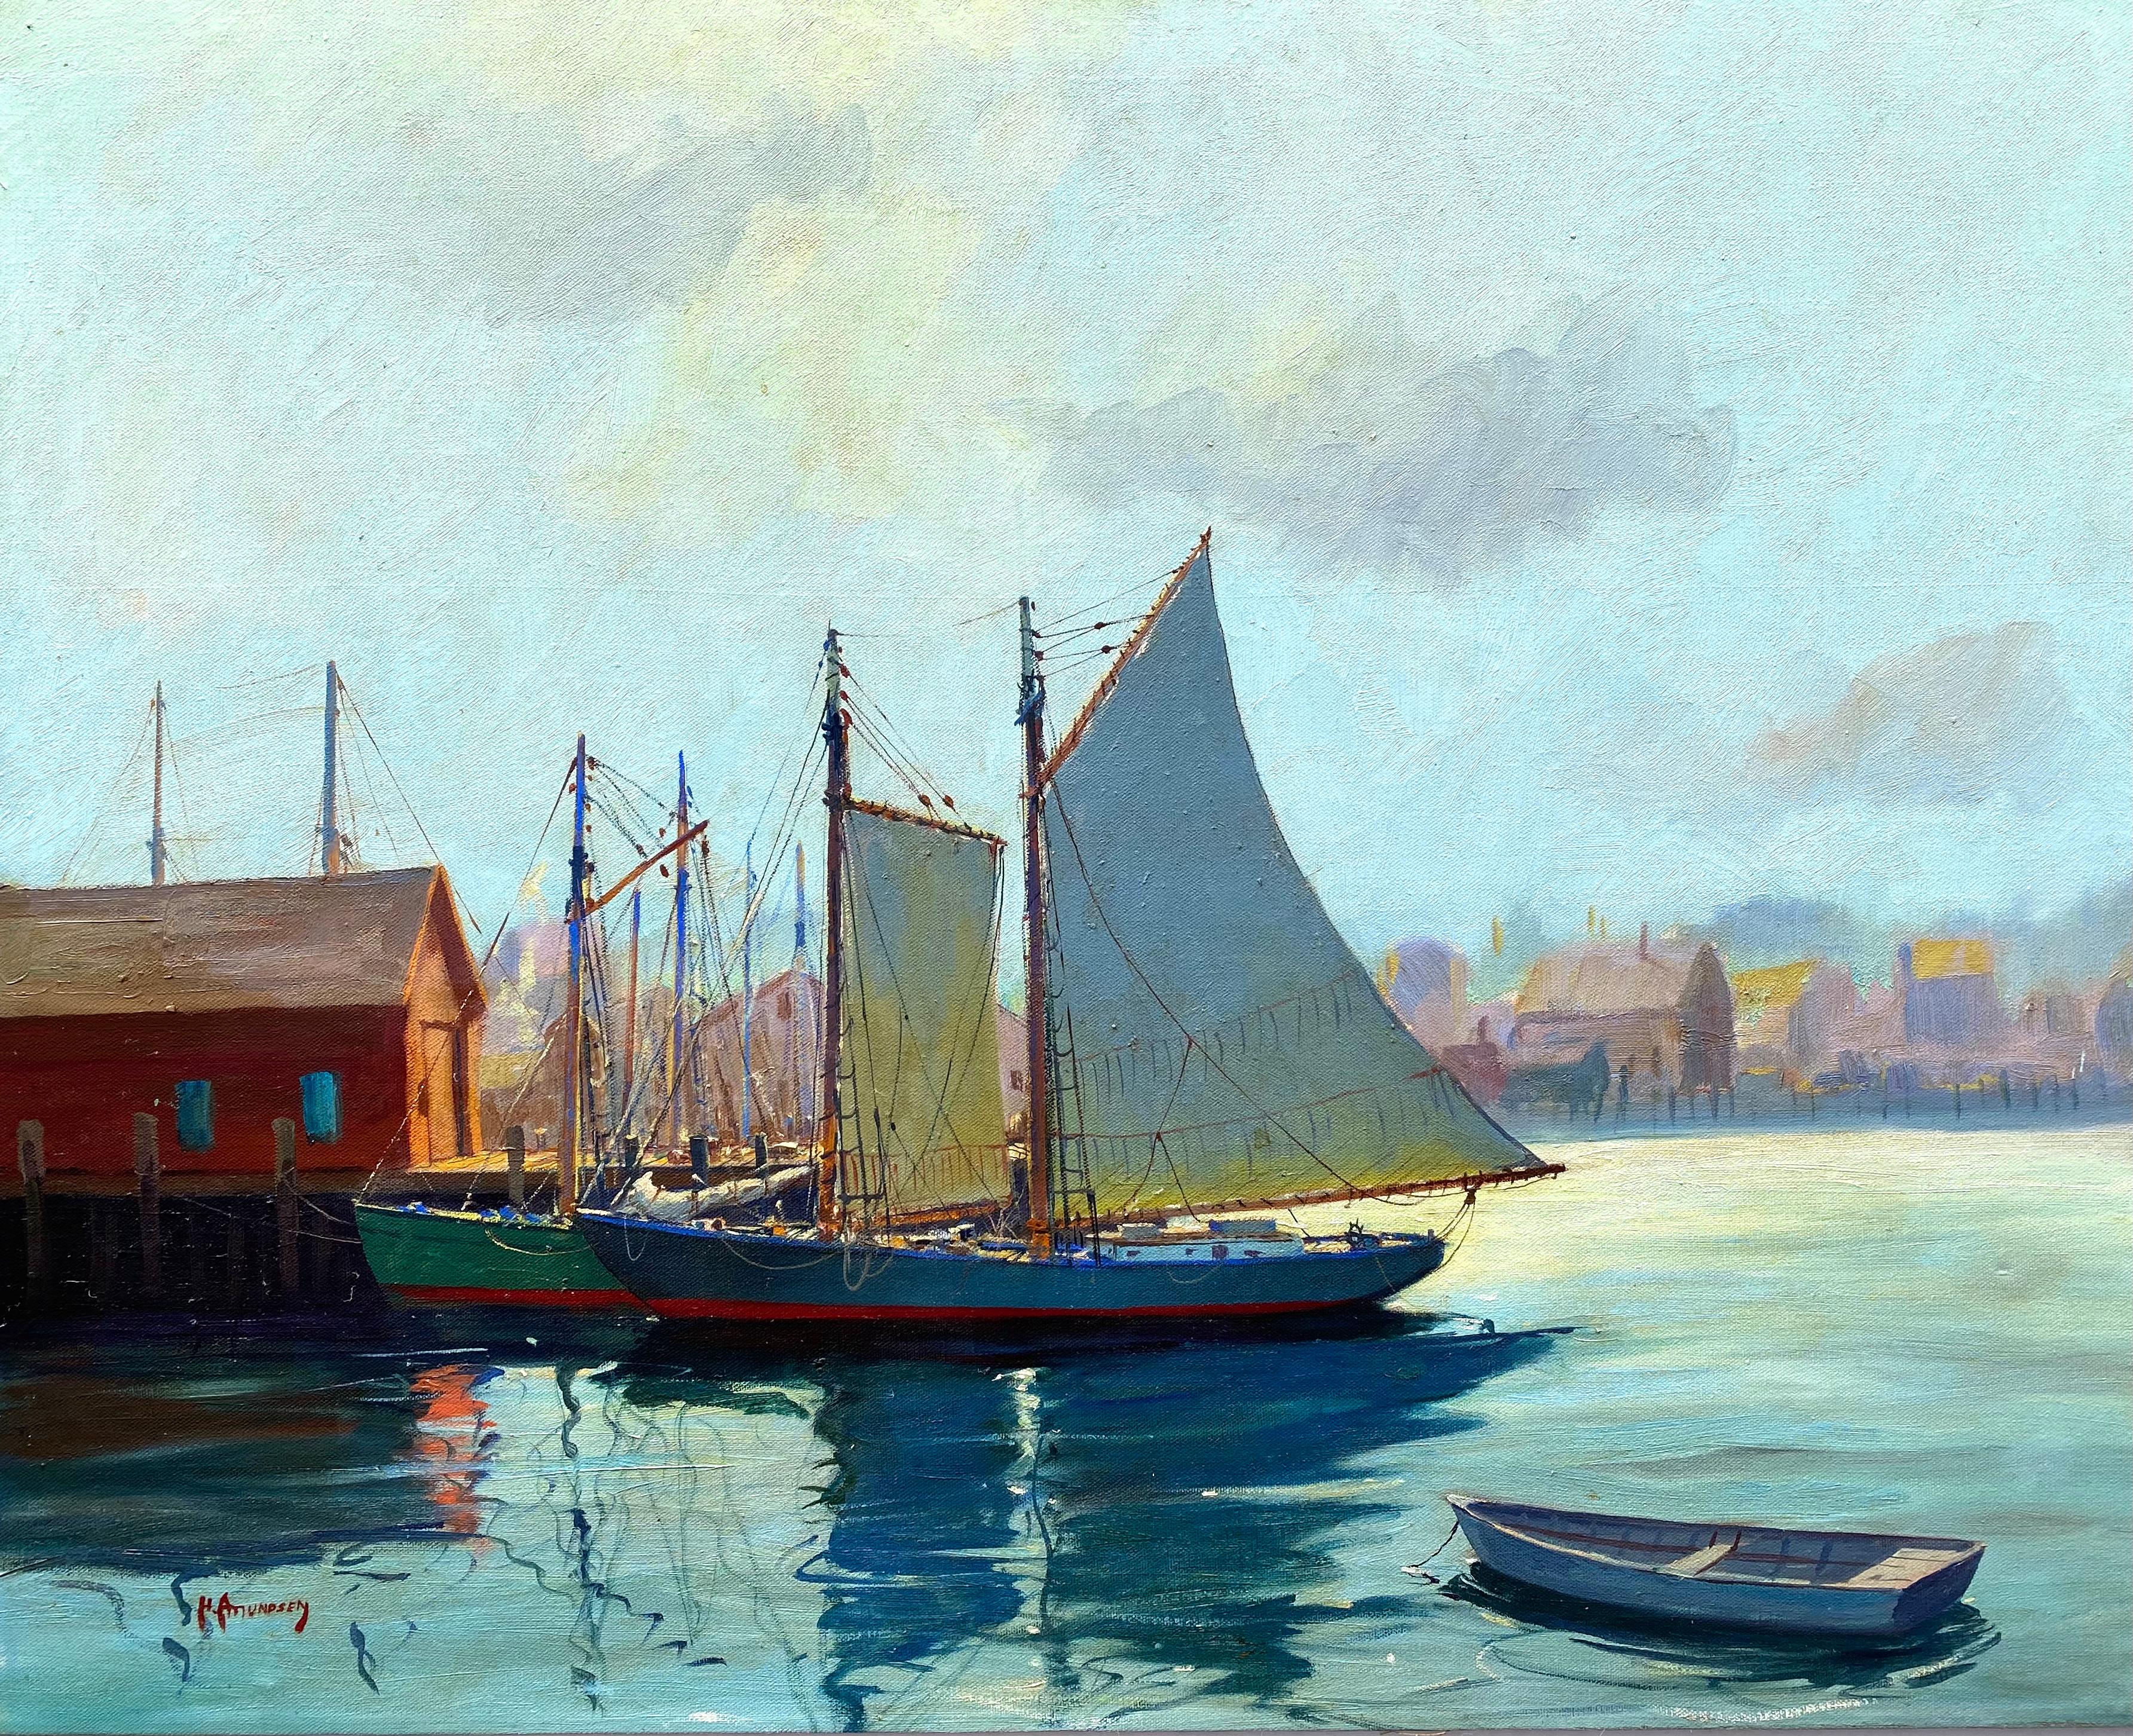 C. Hjalmar Amundsen Landscape Painting - “Gloucester Harbor”